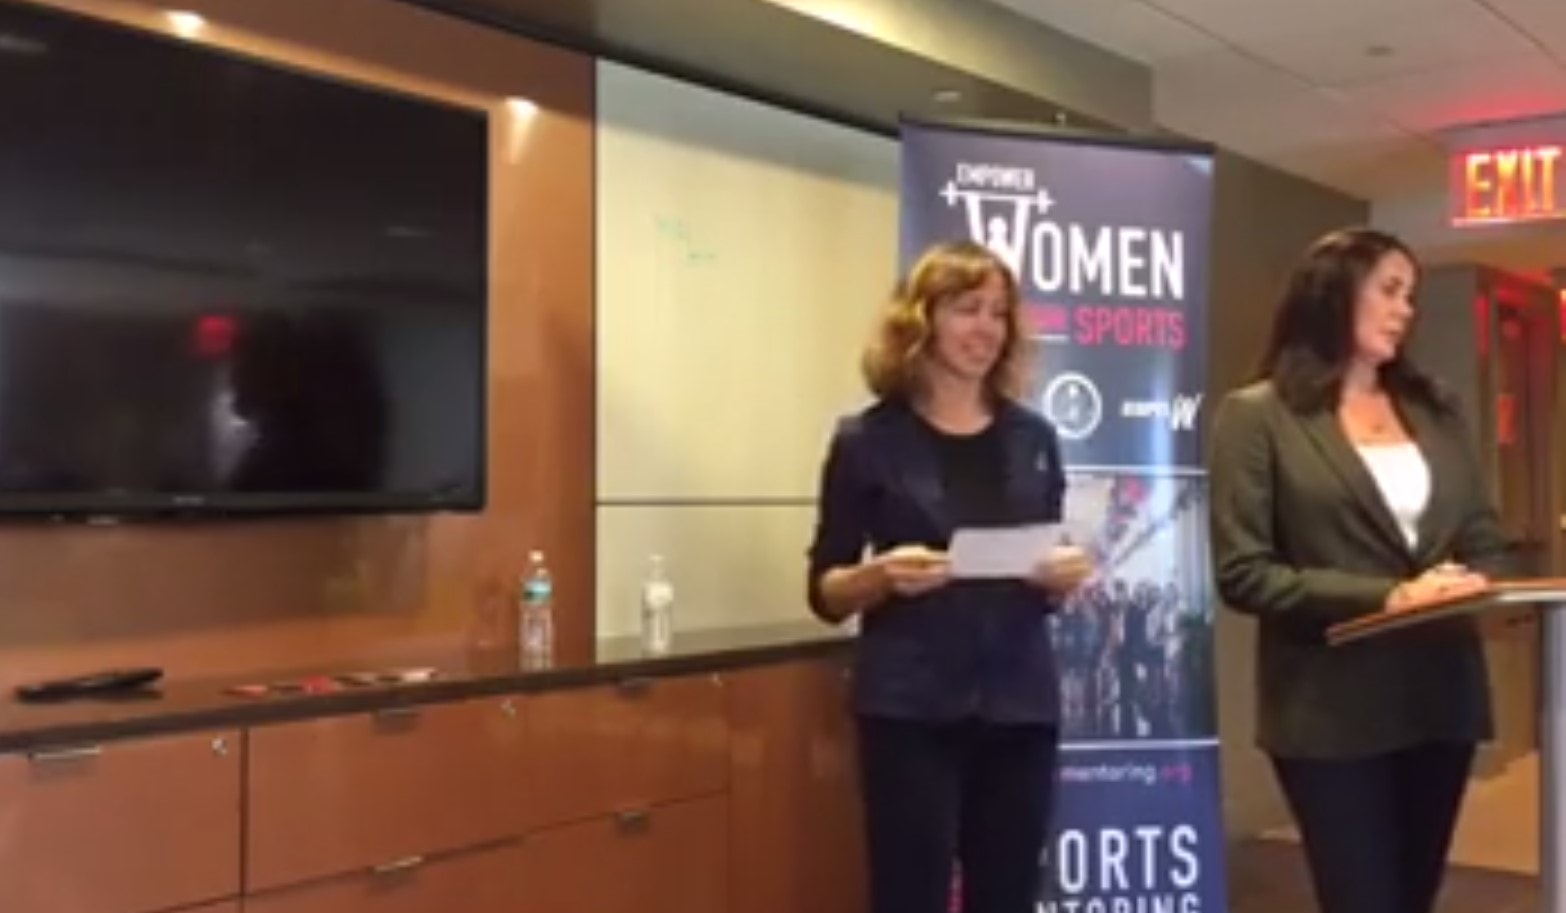 Action Plan presentation by Silvija Mitevska, who was mentored by Susan Cohig at NHL!